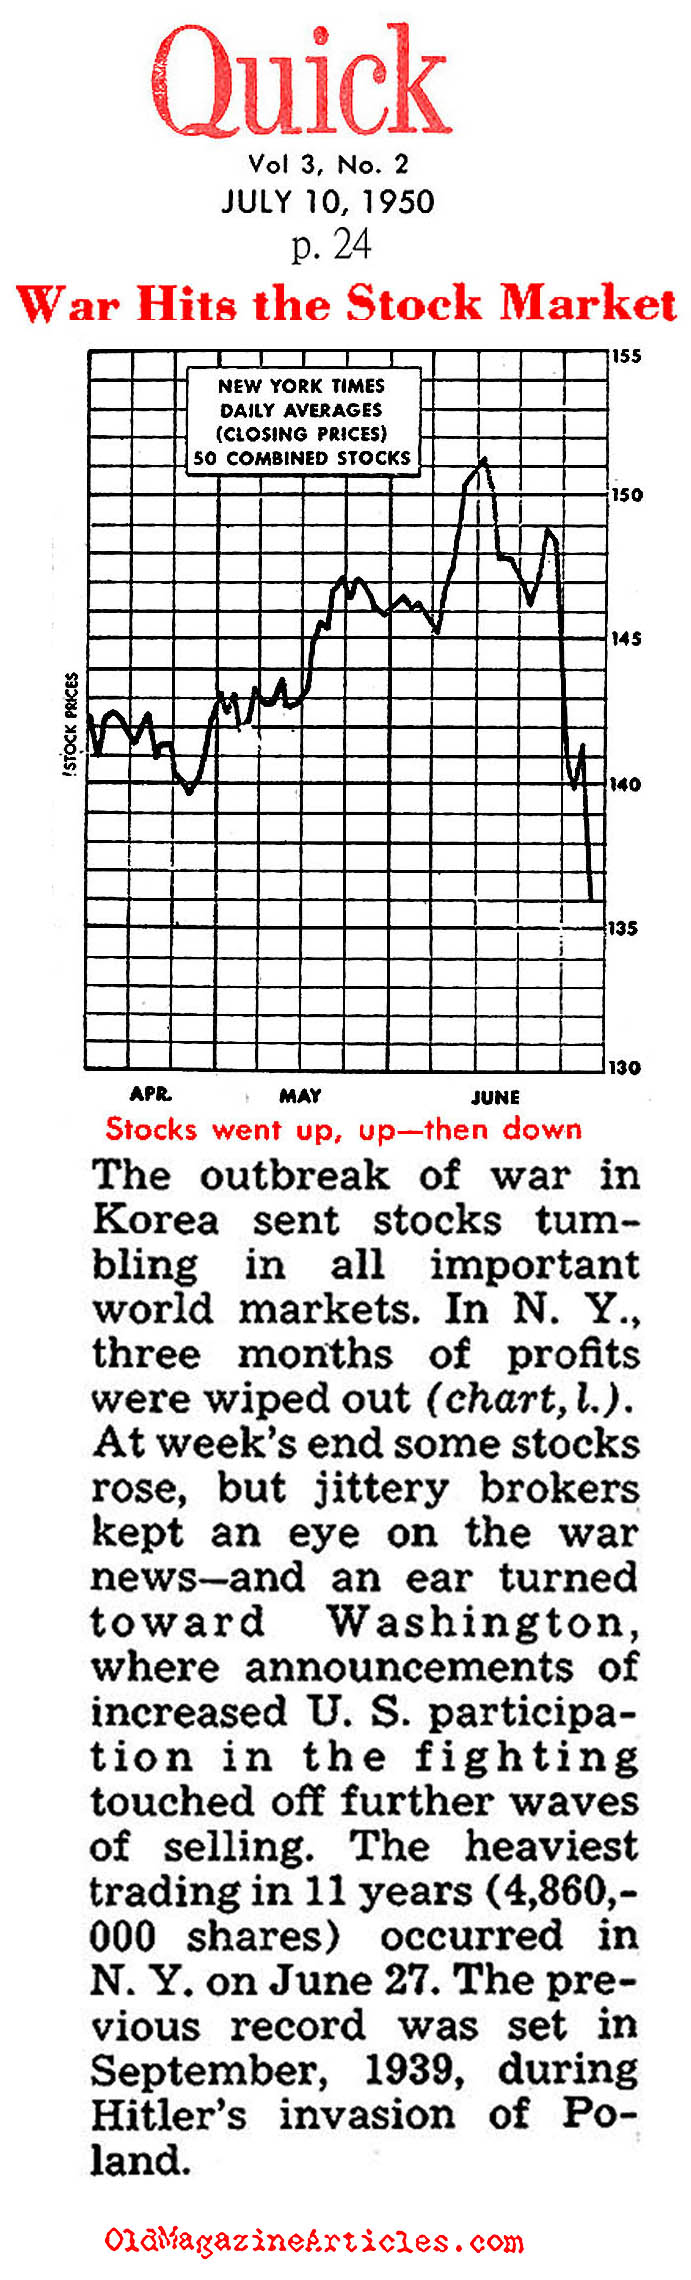 The Korean War's Effect on Wall Street (Quick Magazine, 1950)